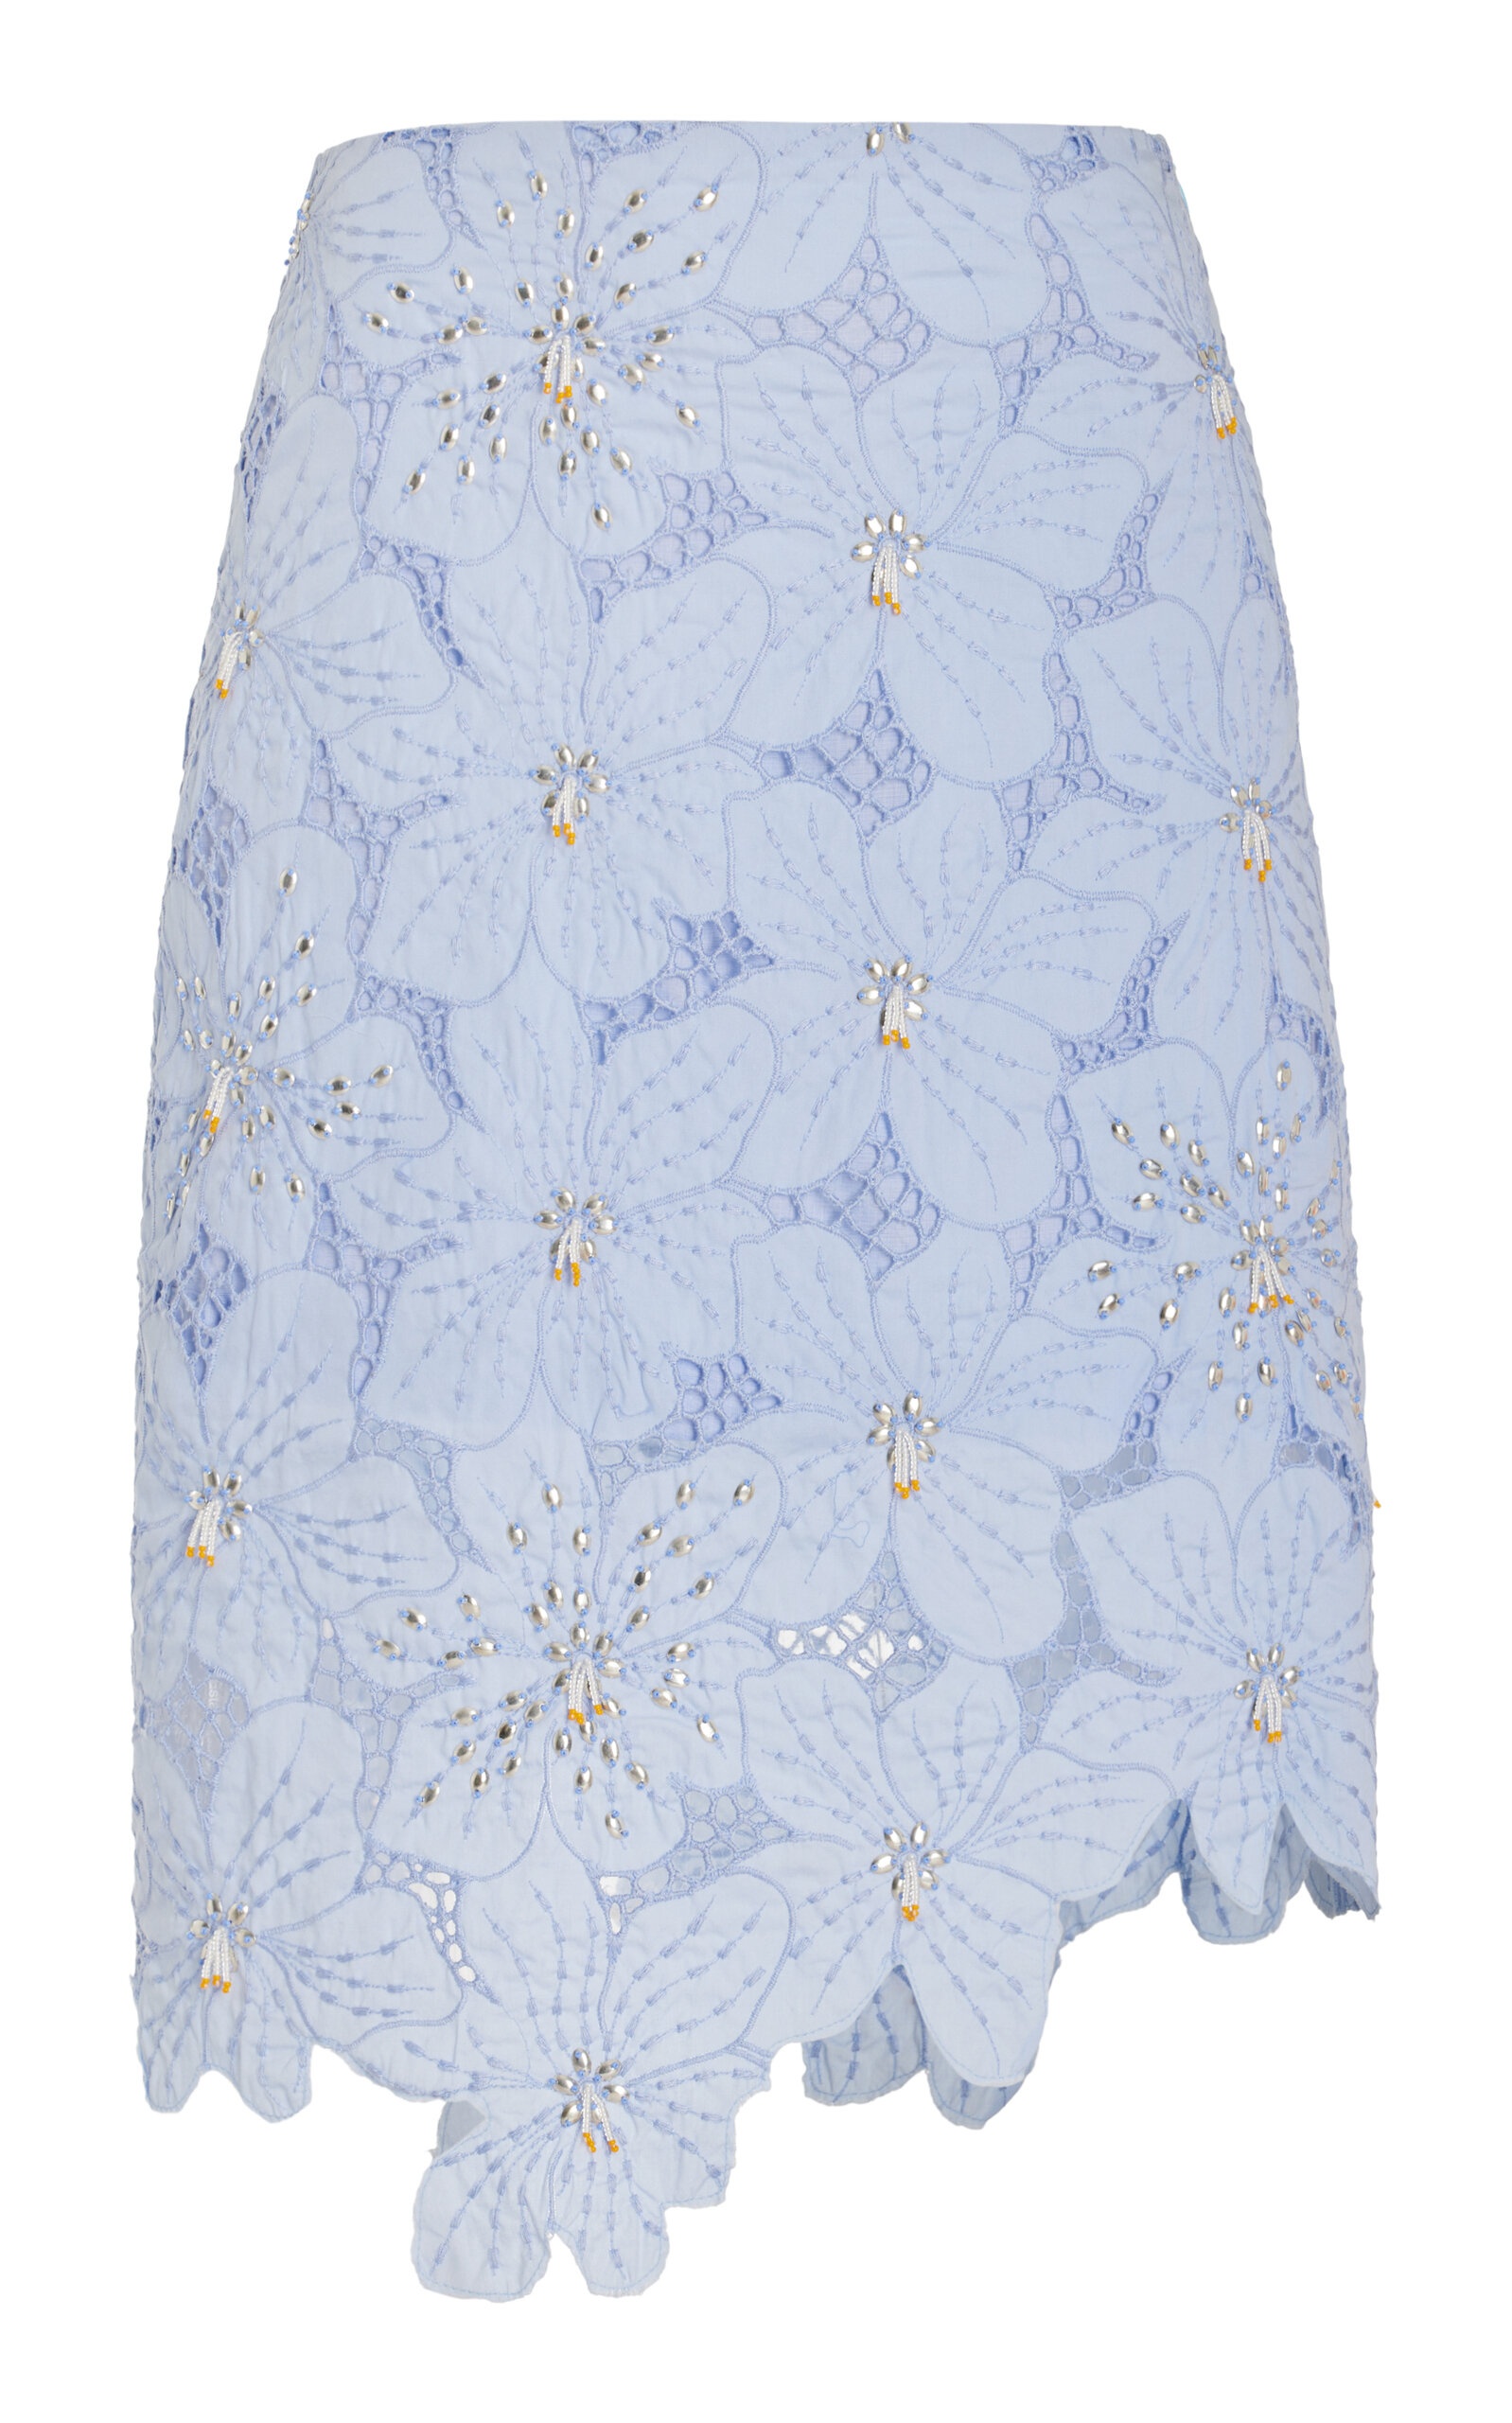 Constellation Embellished Floral Lace Midi Skirt blue - 1